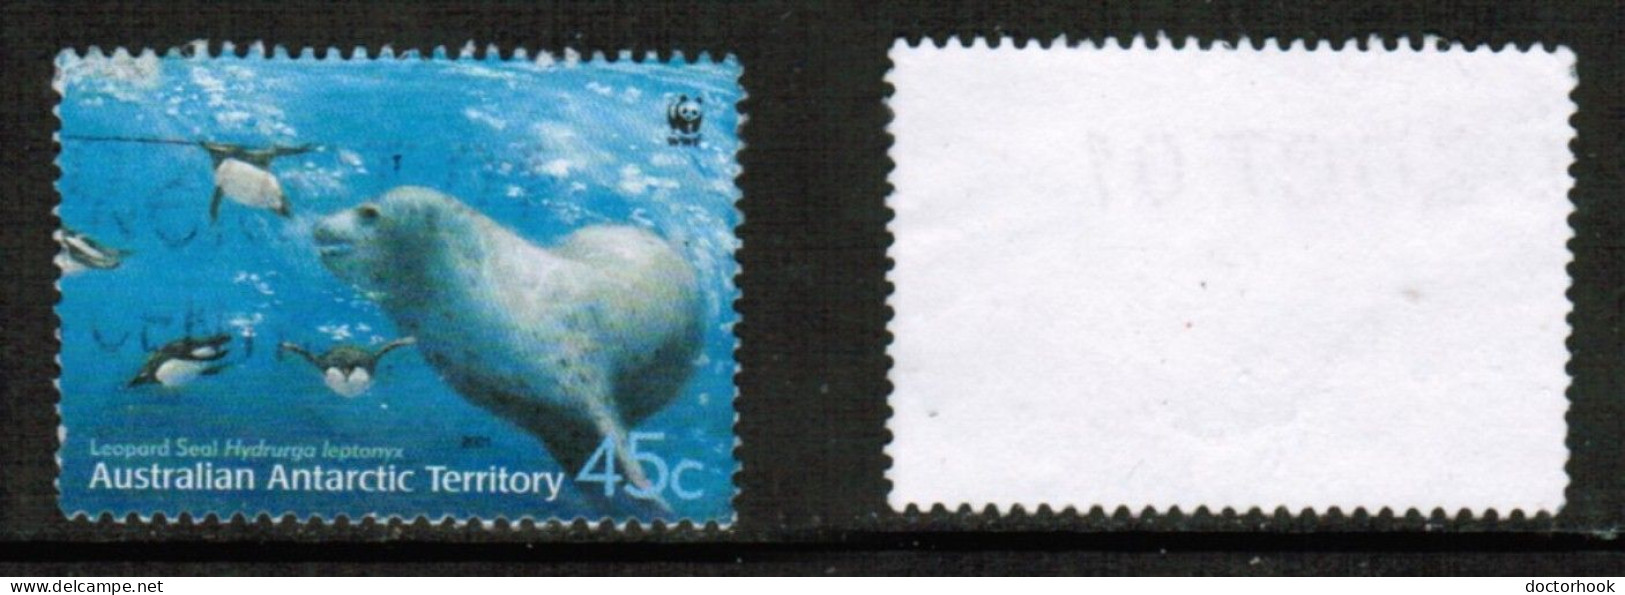 AUSTRALIAN ANTARCTIC TERRITORY   Scott # L 118d USED (CONDITION AS PER SCAN) (Stamp Scan # 930-12) - Oblitérés